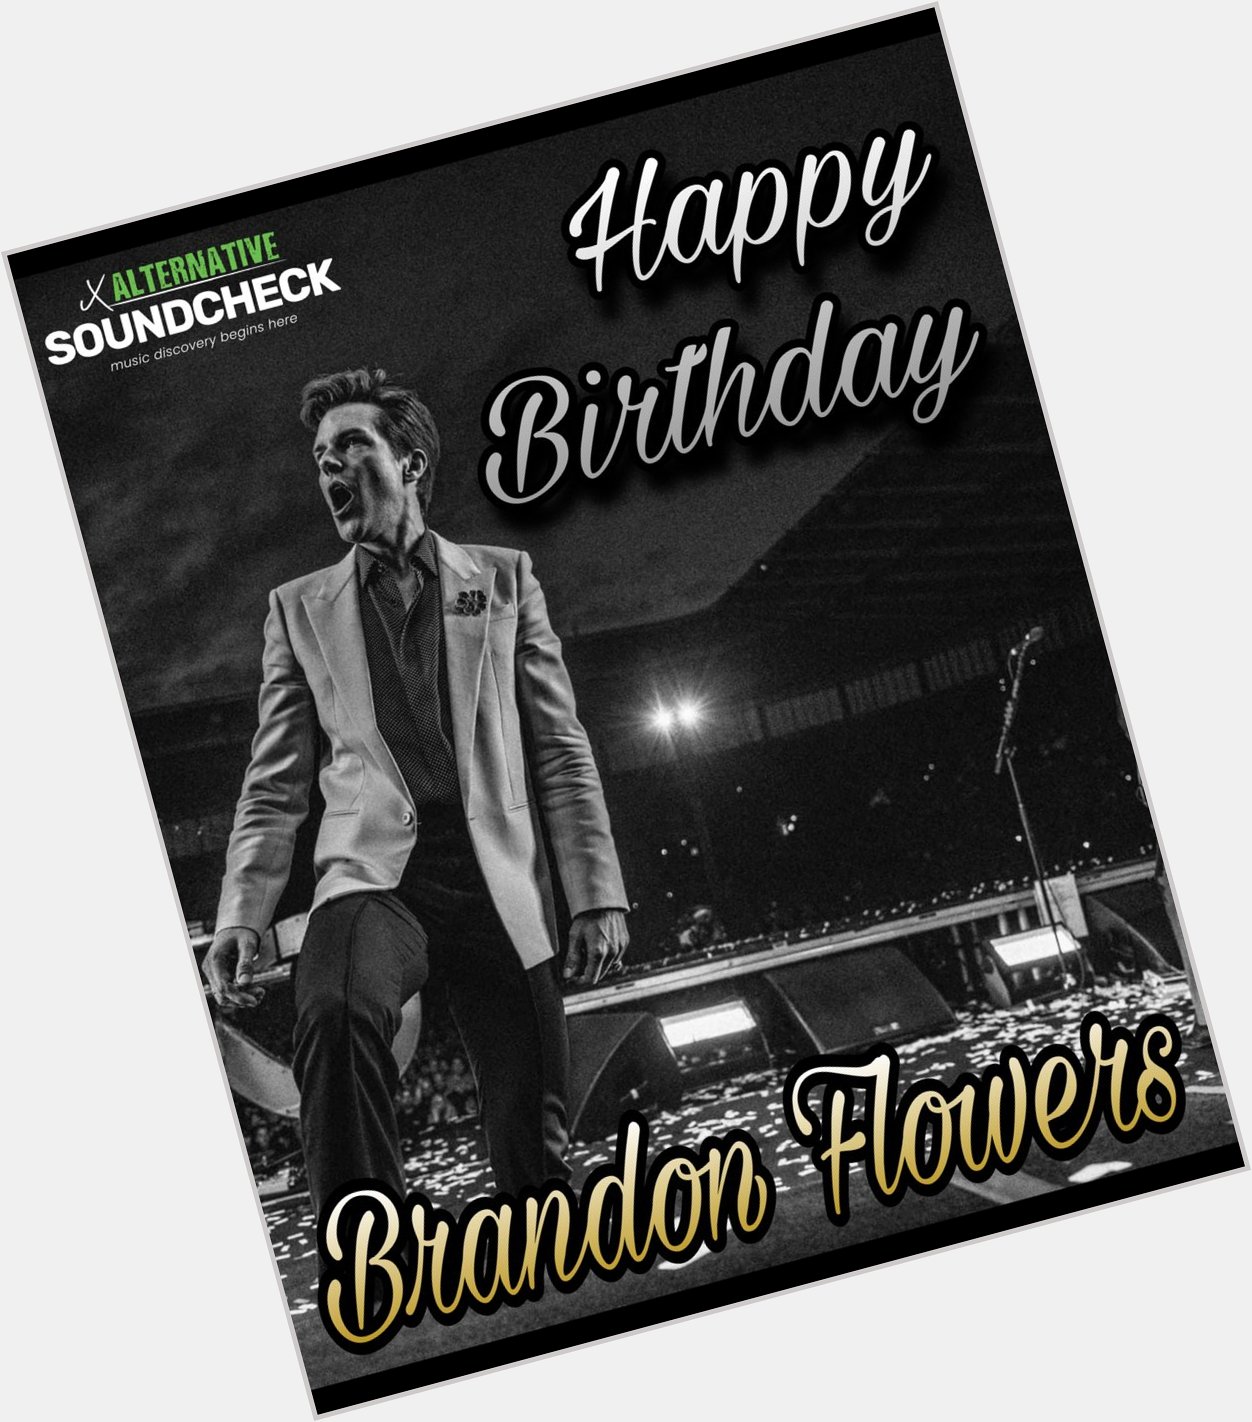 Happy Birthday to artist Brandon Flowers of 